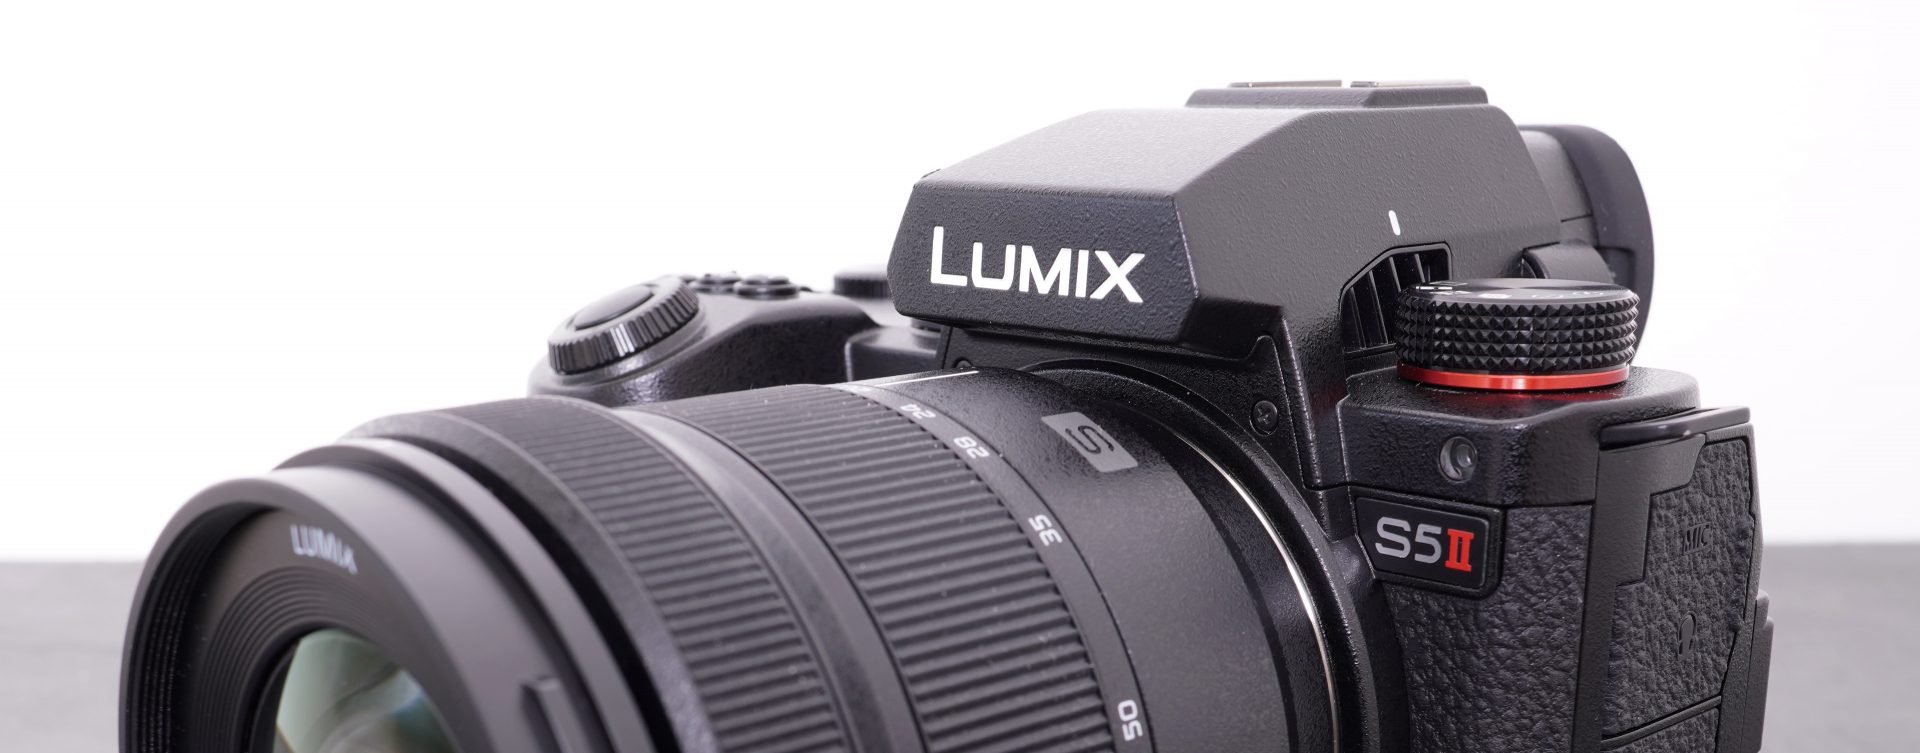 lumix-s5-ii-header-2